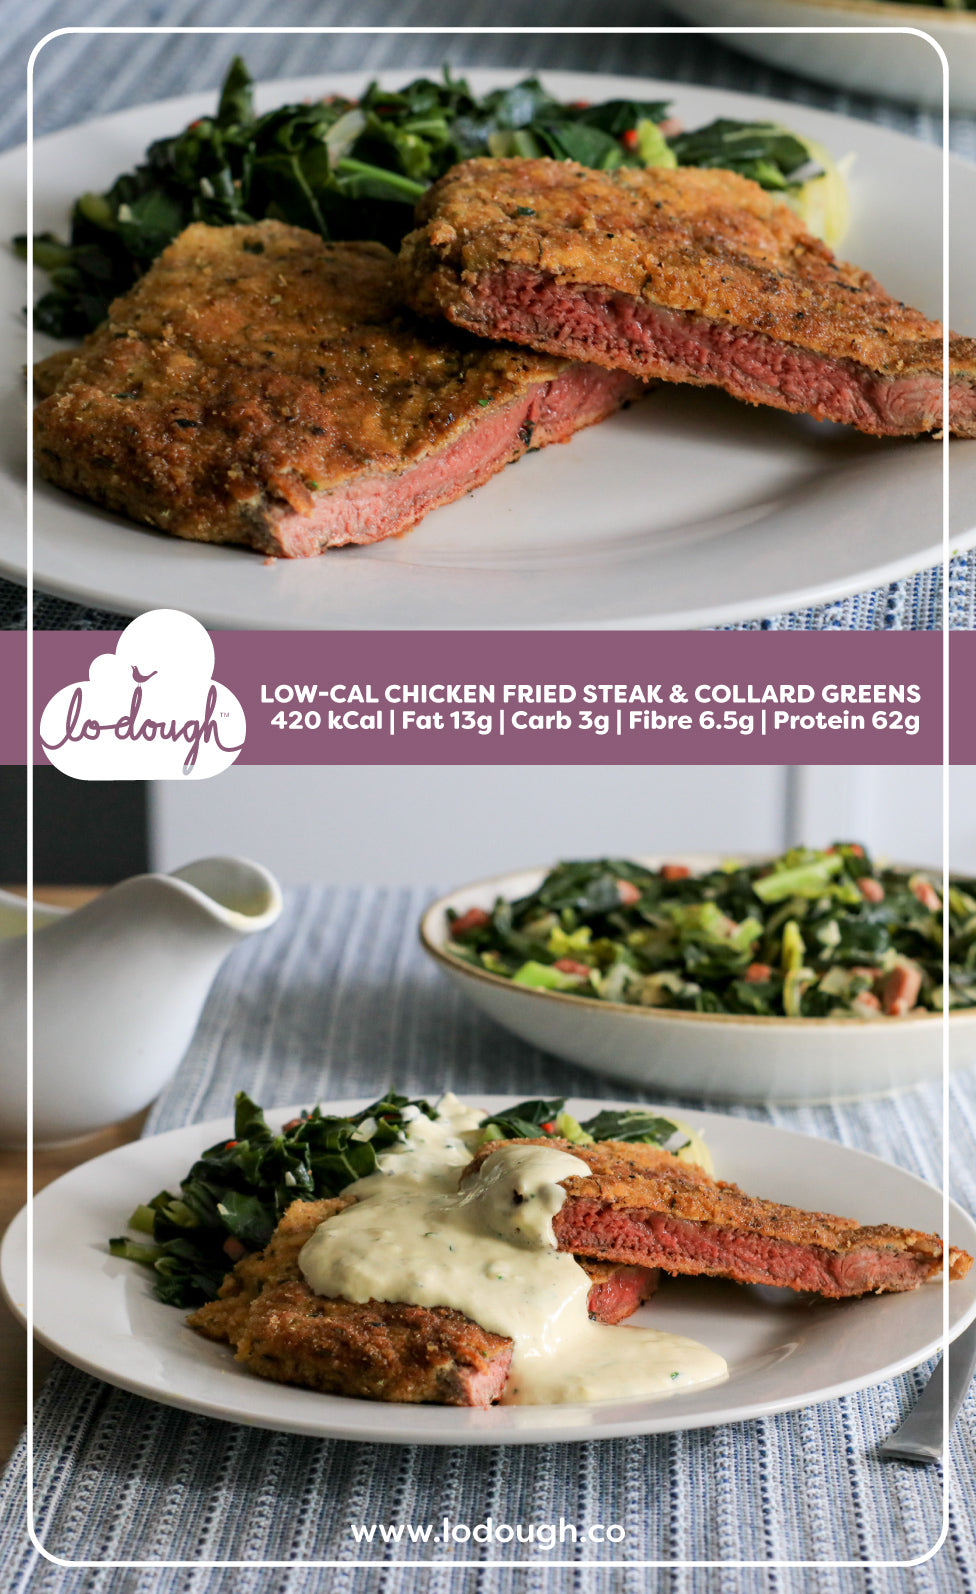 Low-Cal Chicken Fried Steak & Collard Greens – Lo-Dough